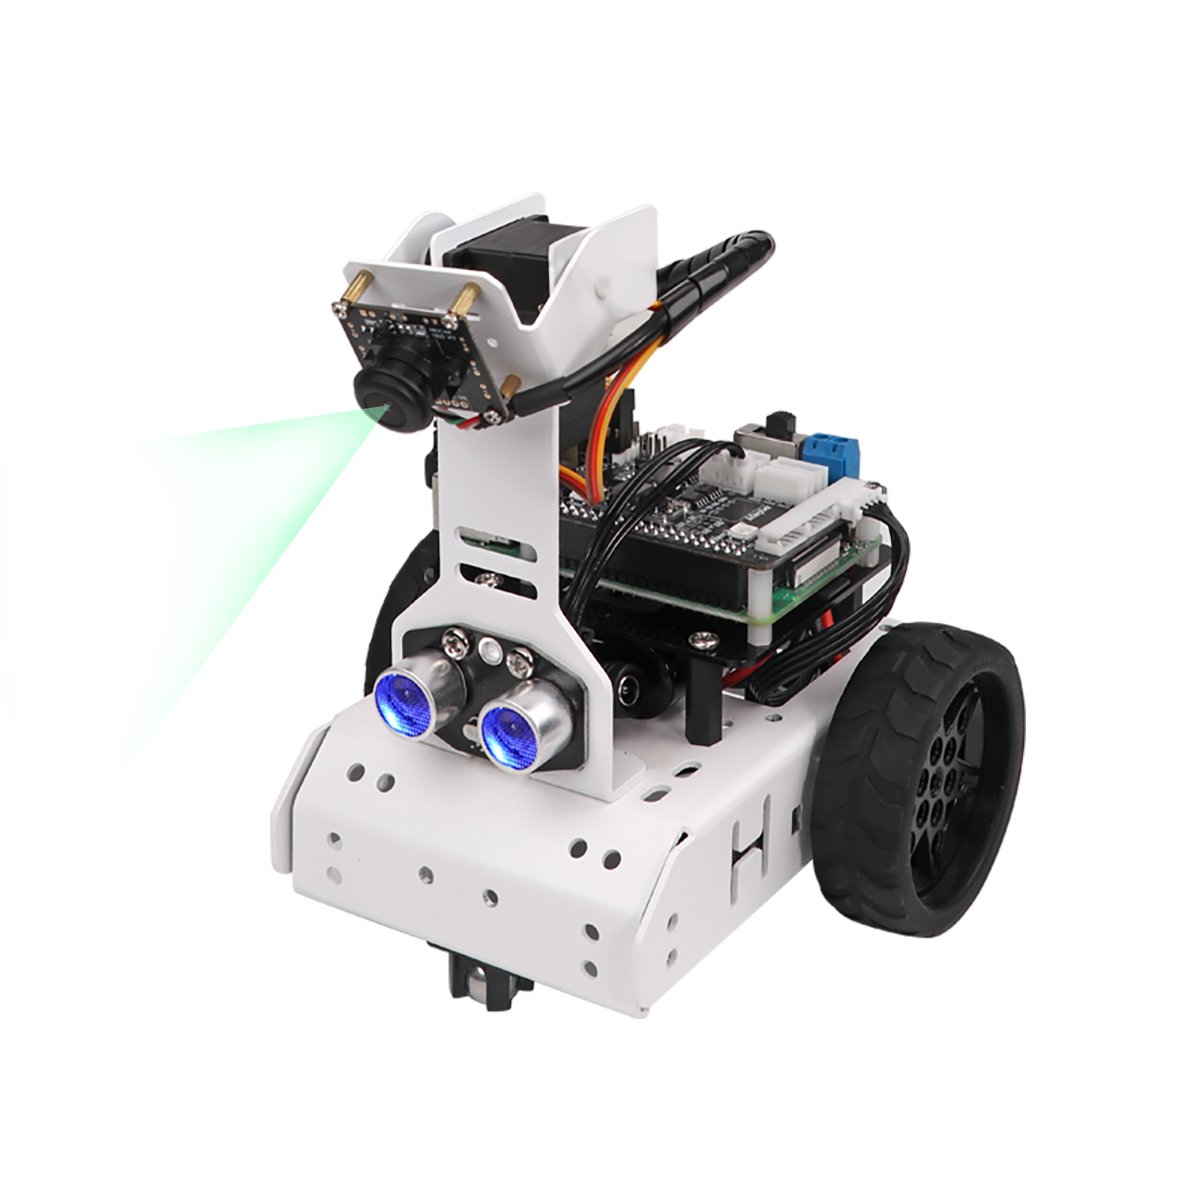 Hiwonder GoGoPi Vision Robot Car for Python Powered by Pi 4B(Not Included) Oz Robotics